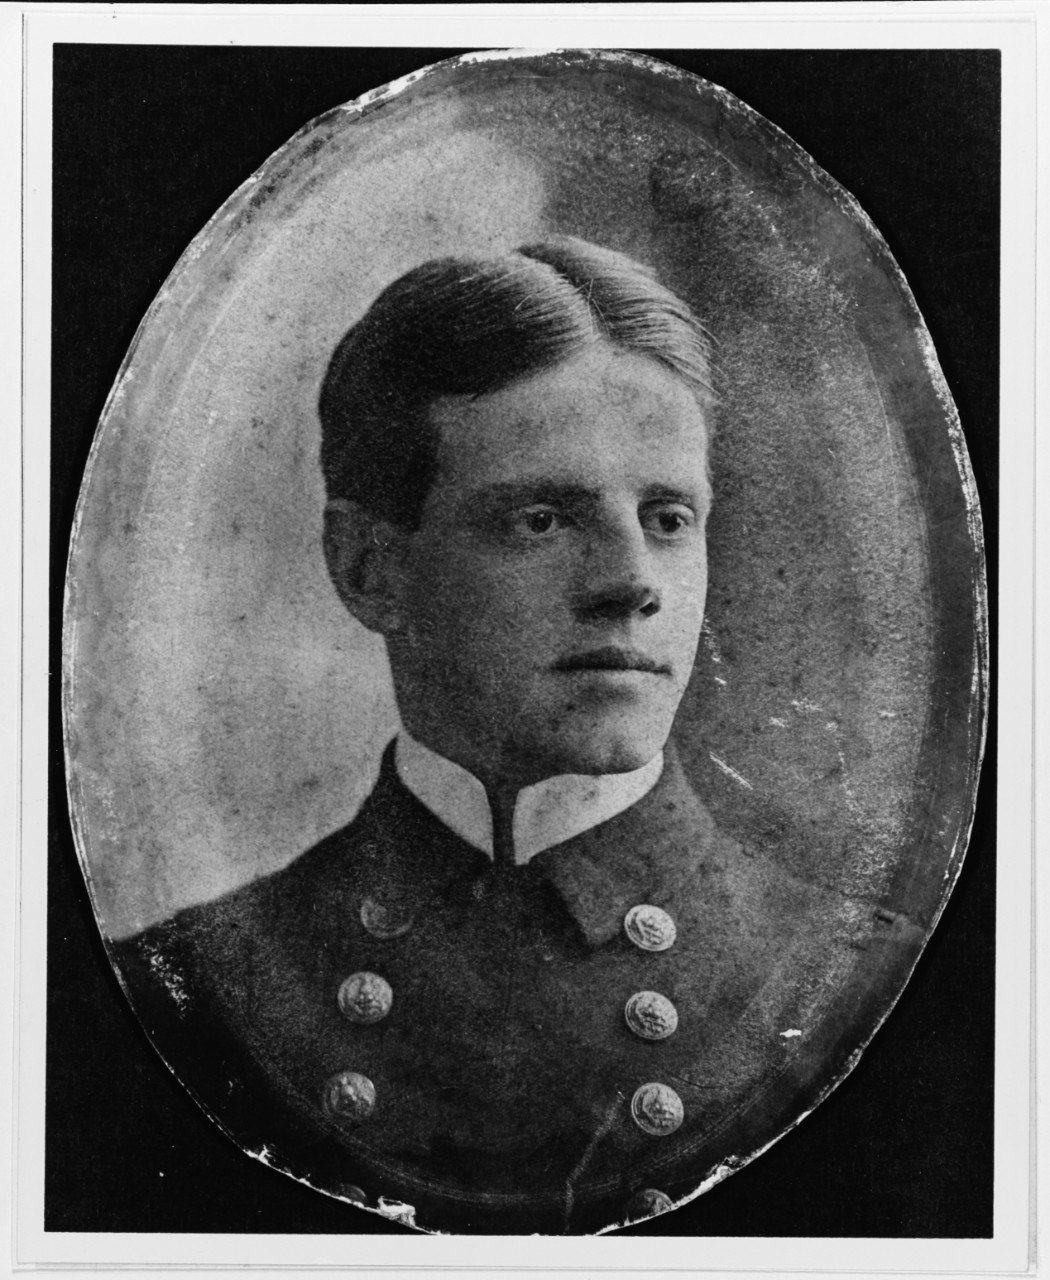 Midshipman Henry C. Mustin, USN